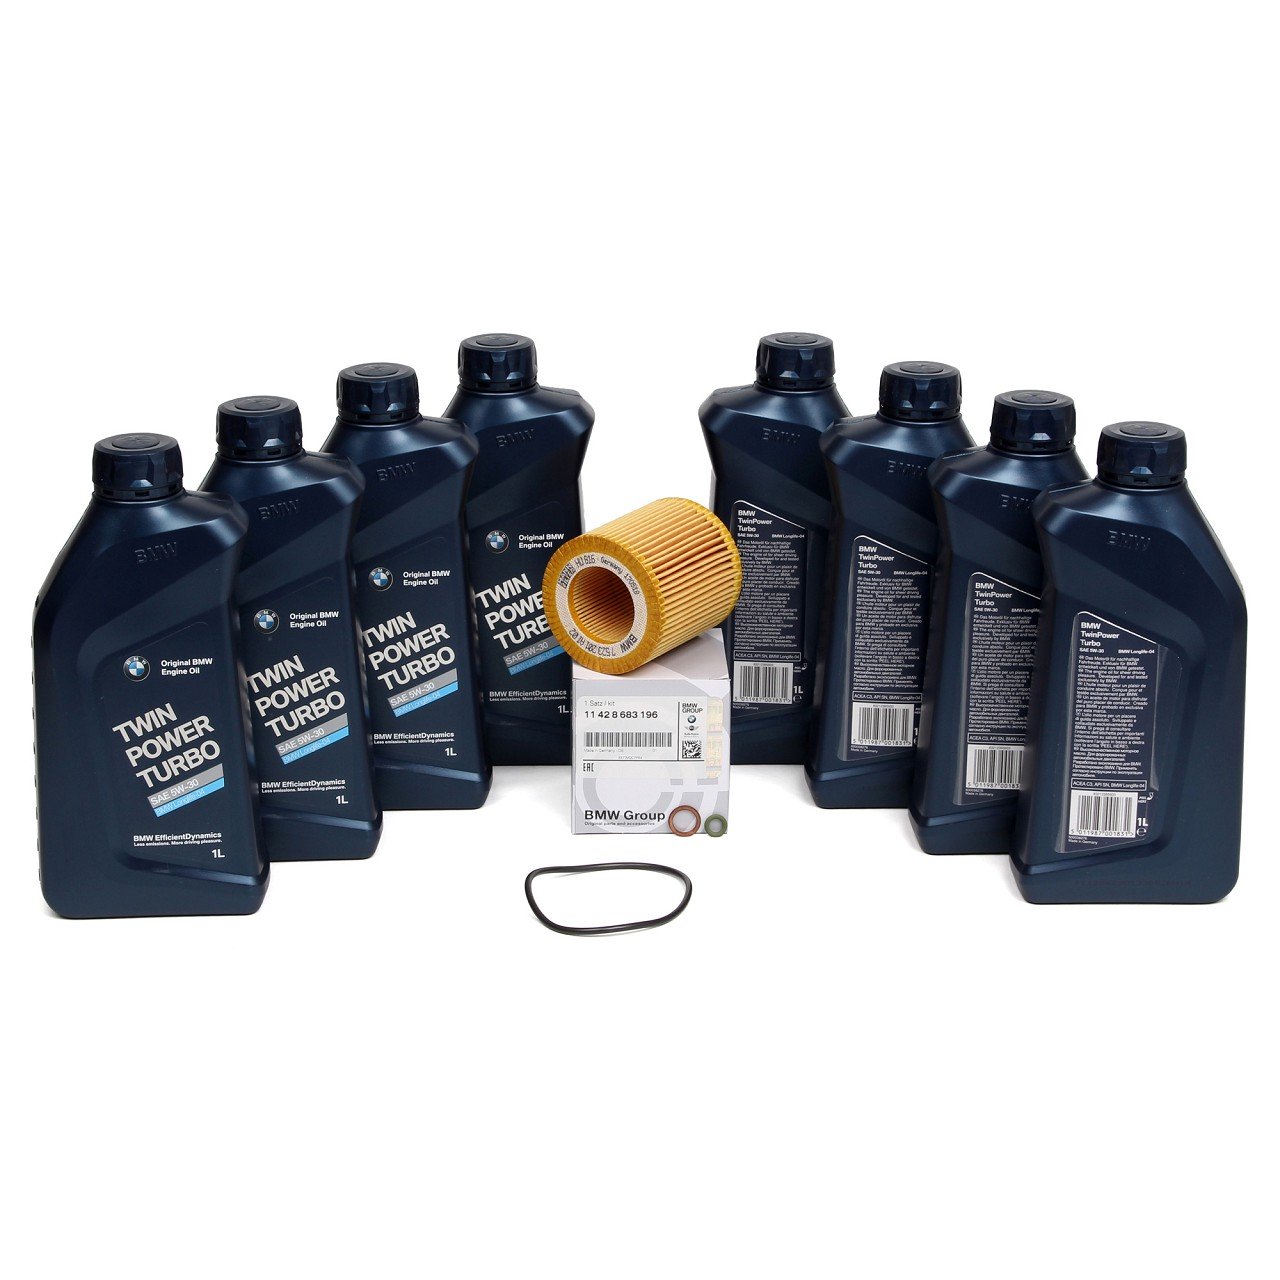 ORIGINAL BMW Motoröl Öl 5W30 LongLife-04 8 Liter + Ölfilter 11427566327